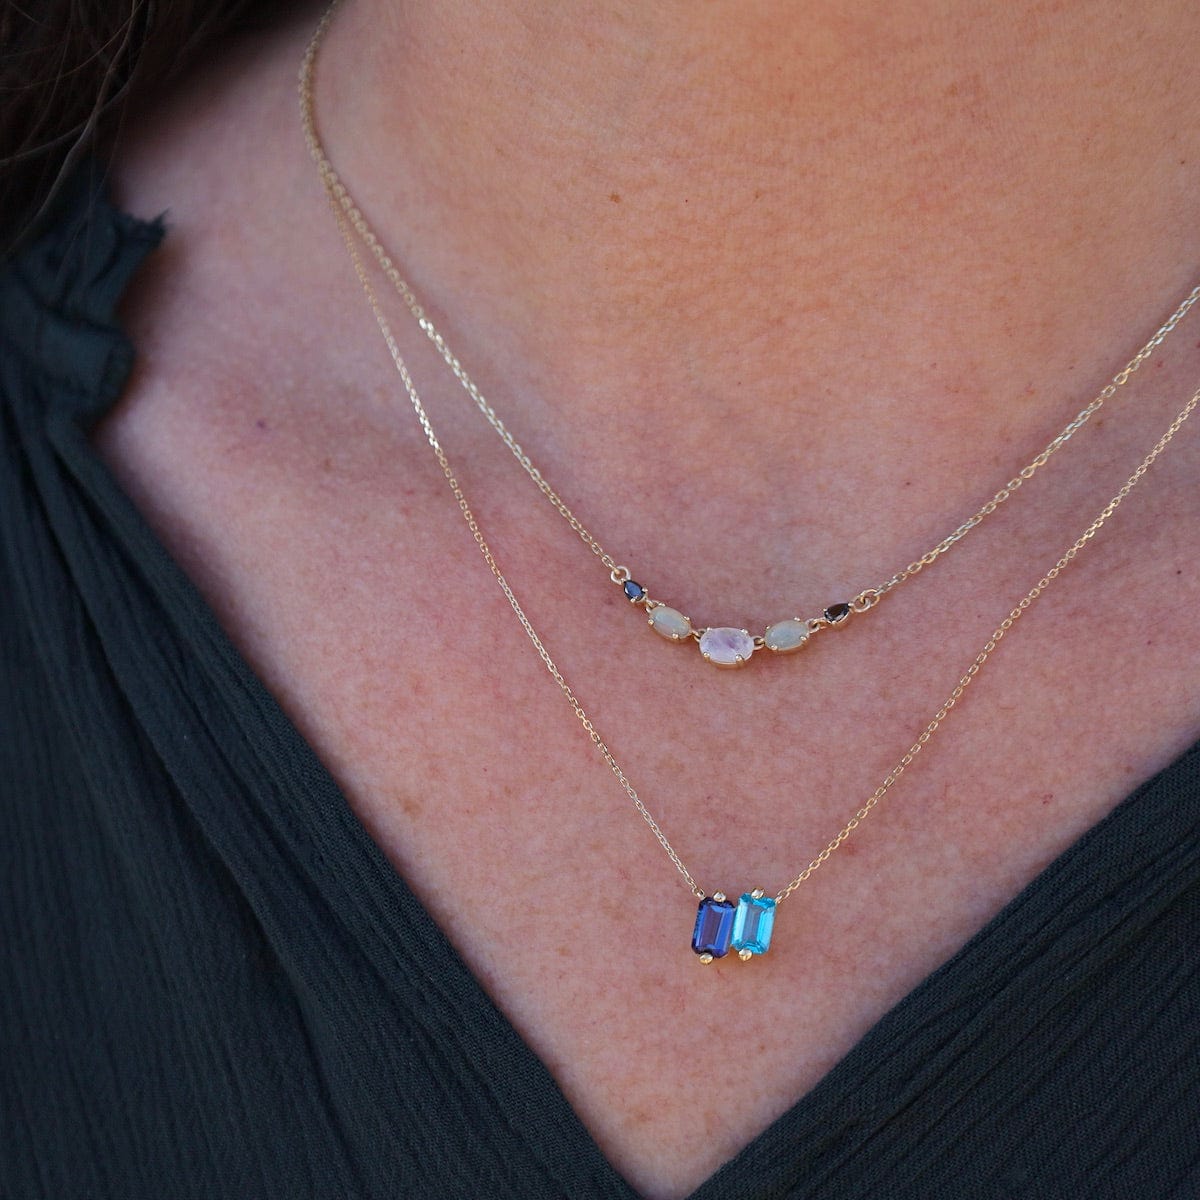 Blue Opal Sea Turtle Necklace